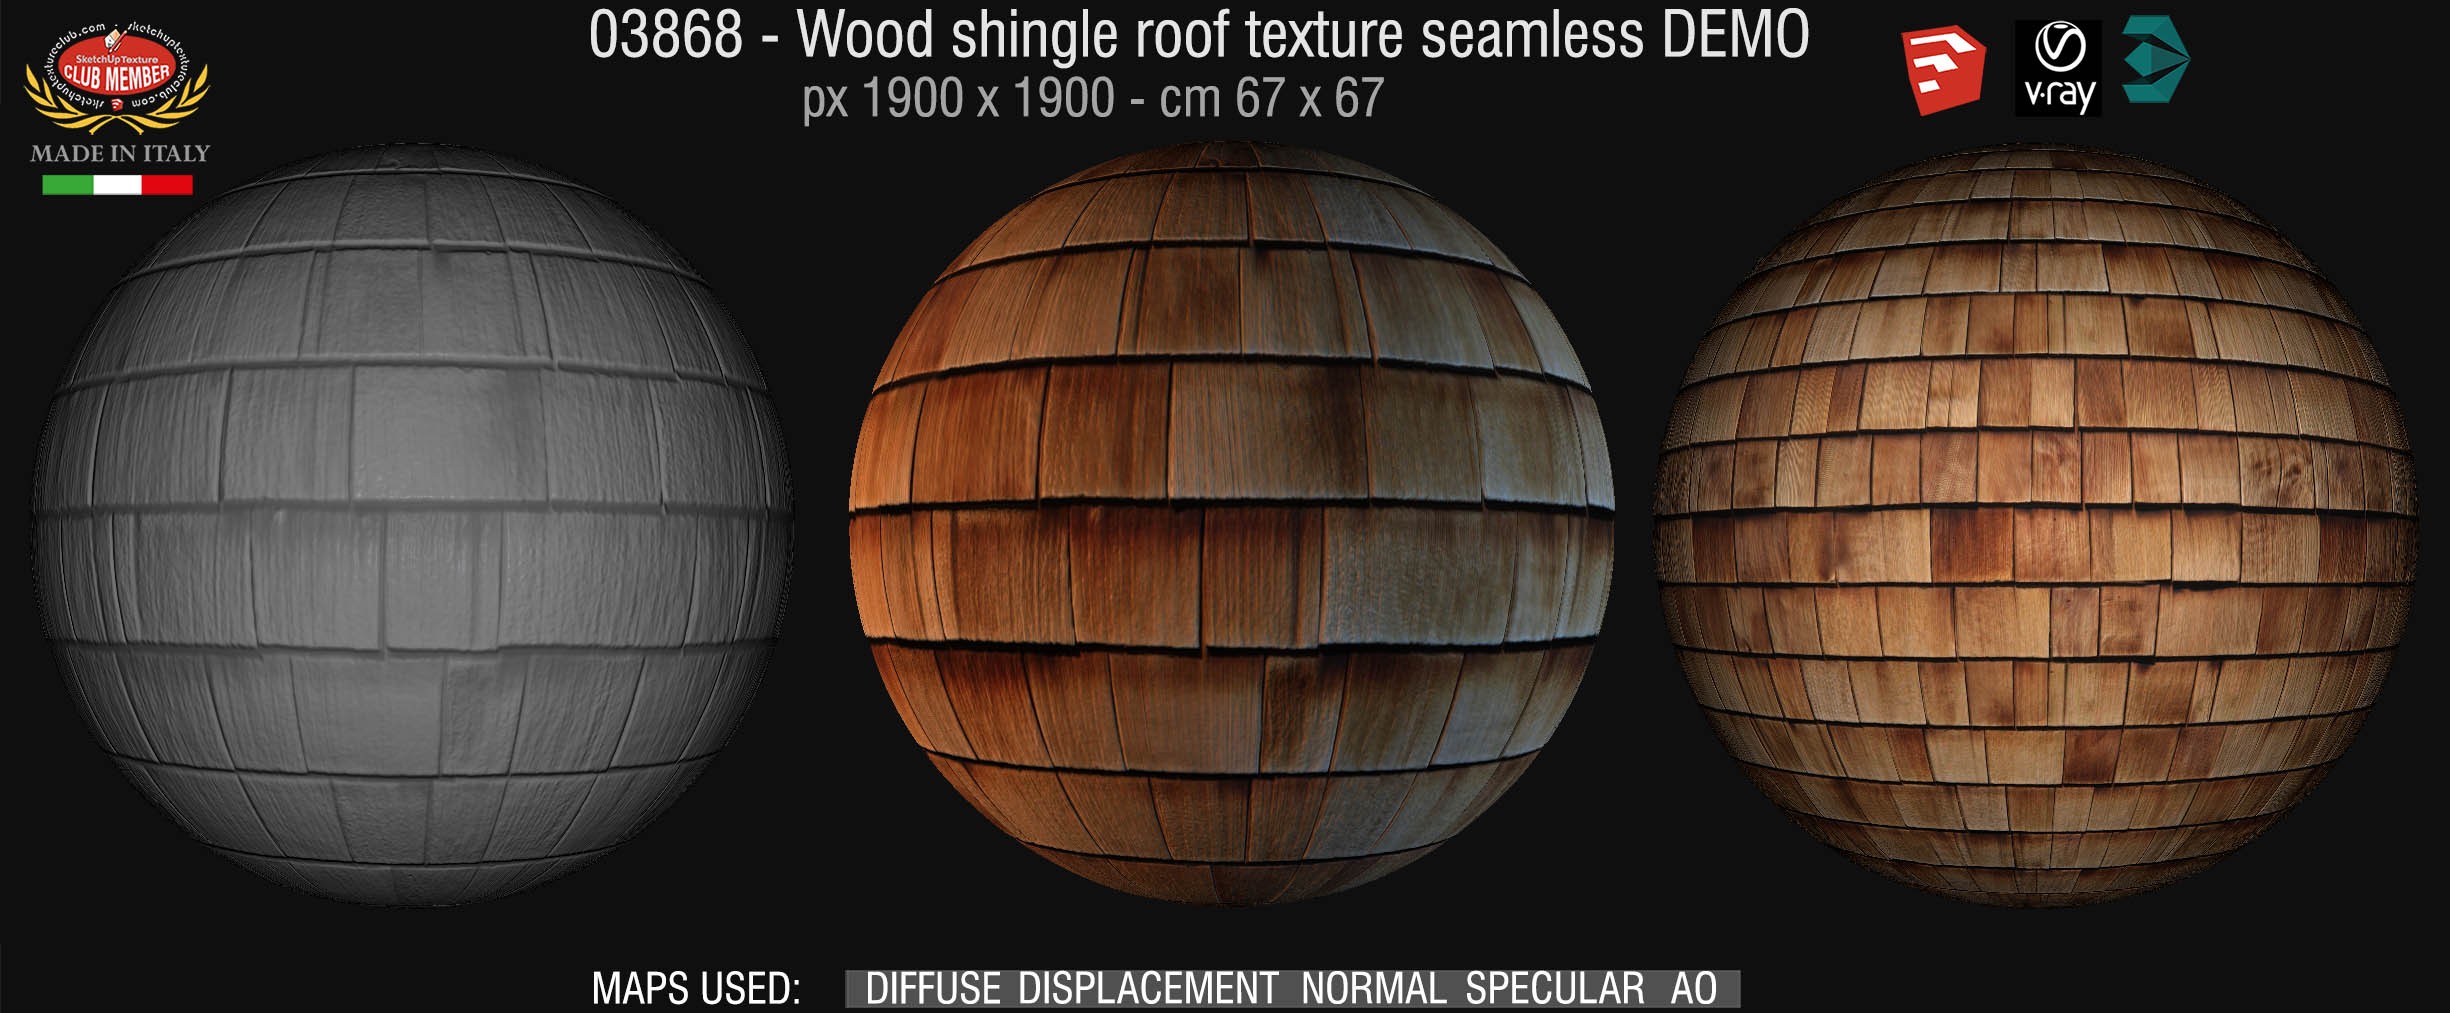 03868 Wood shingle roof texture seamless + maps DEMO